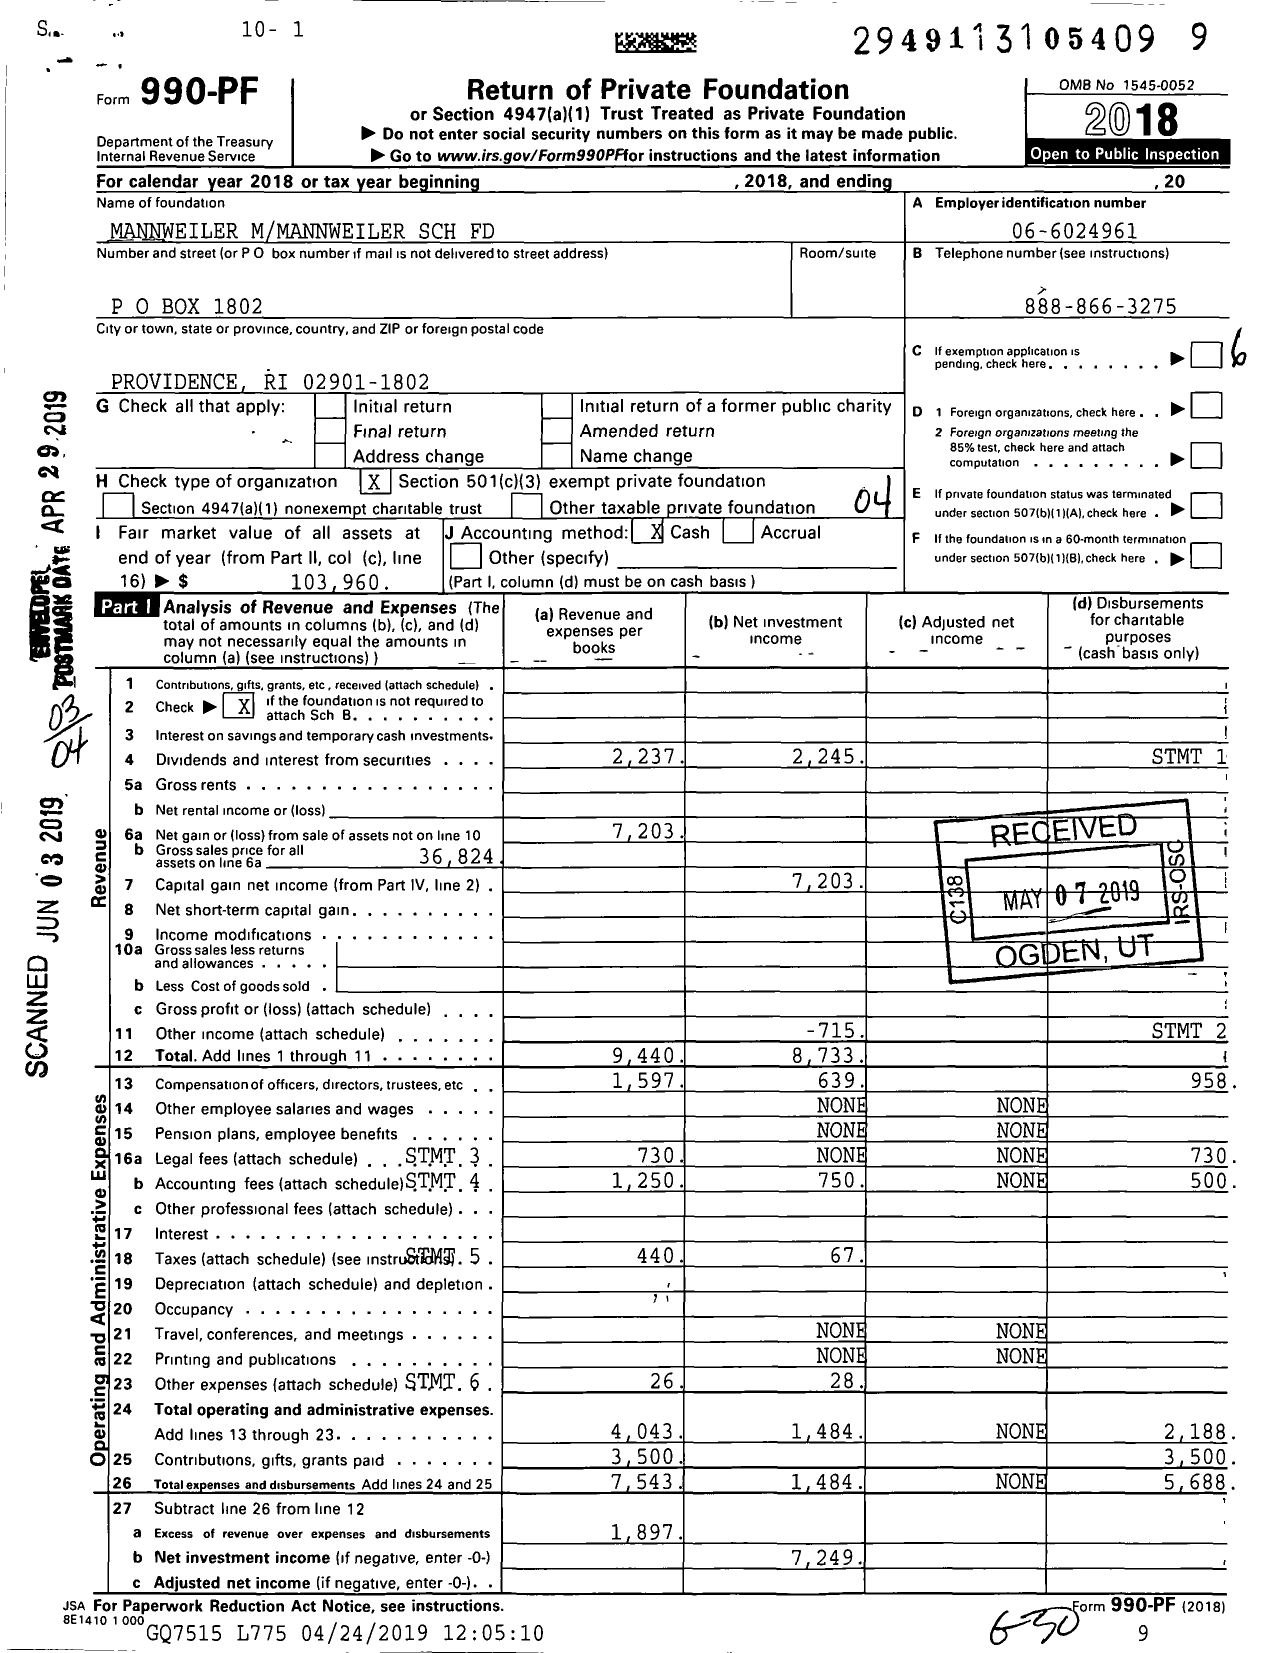 Image of first page of 2018 Form 990PF for Mannweiler Mmannweiler SCH Fund